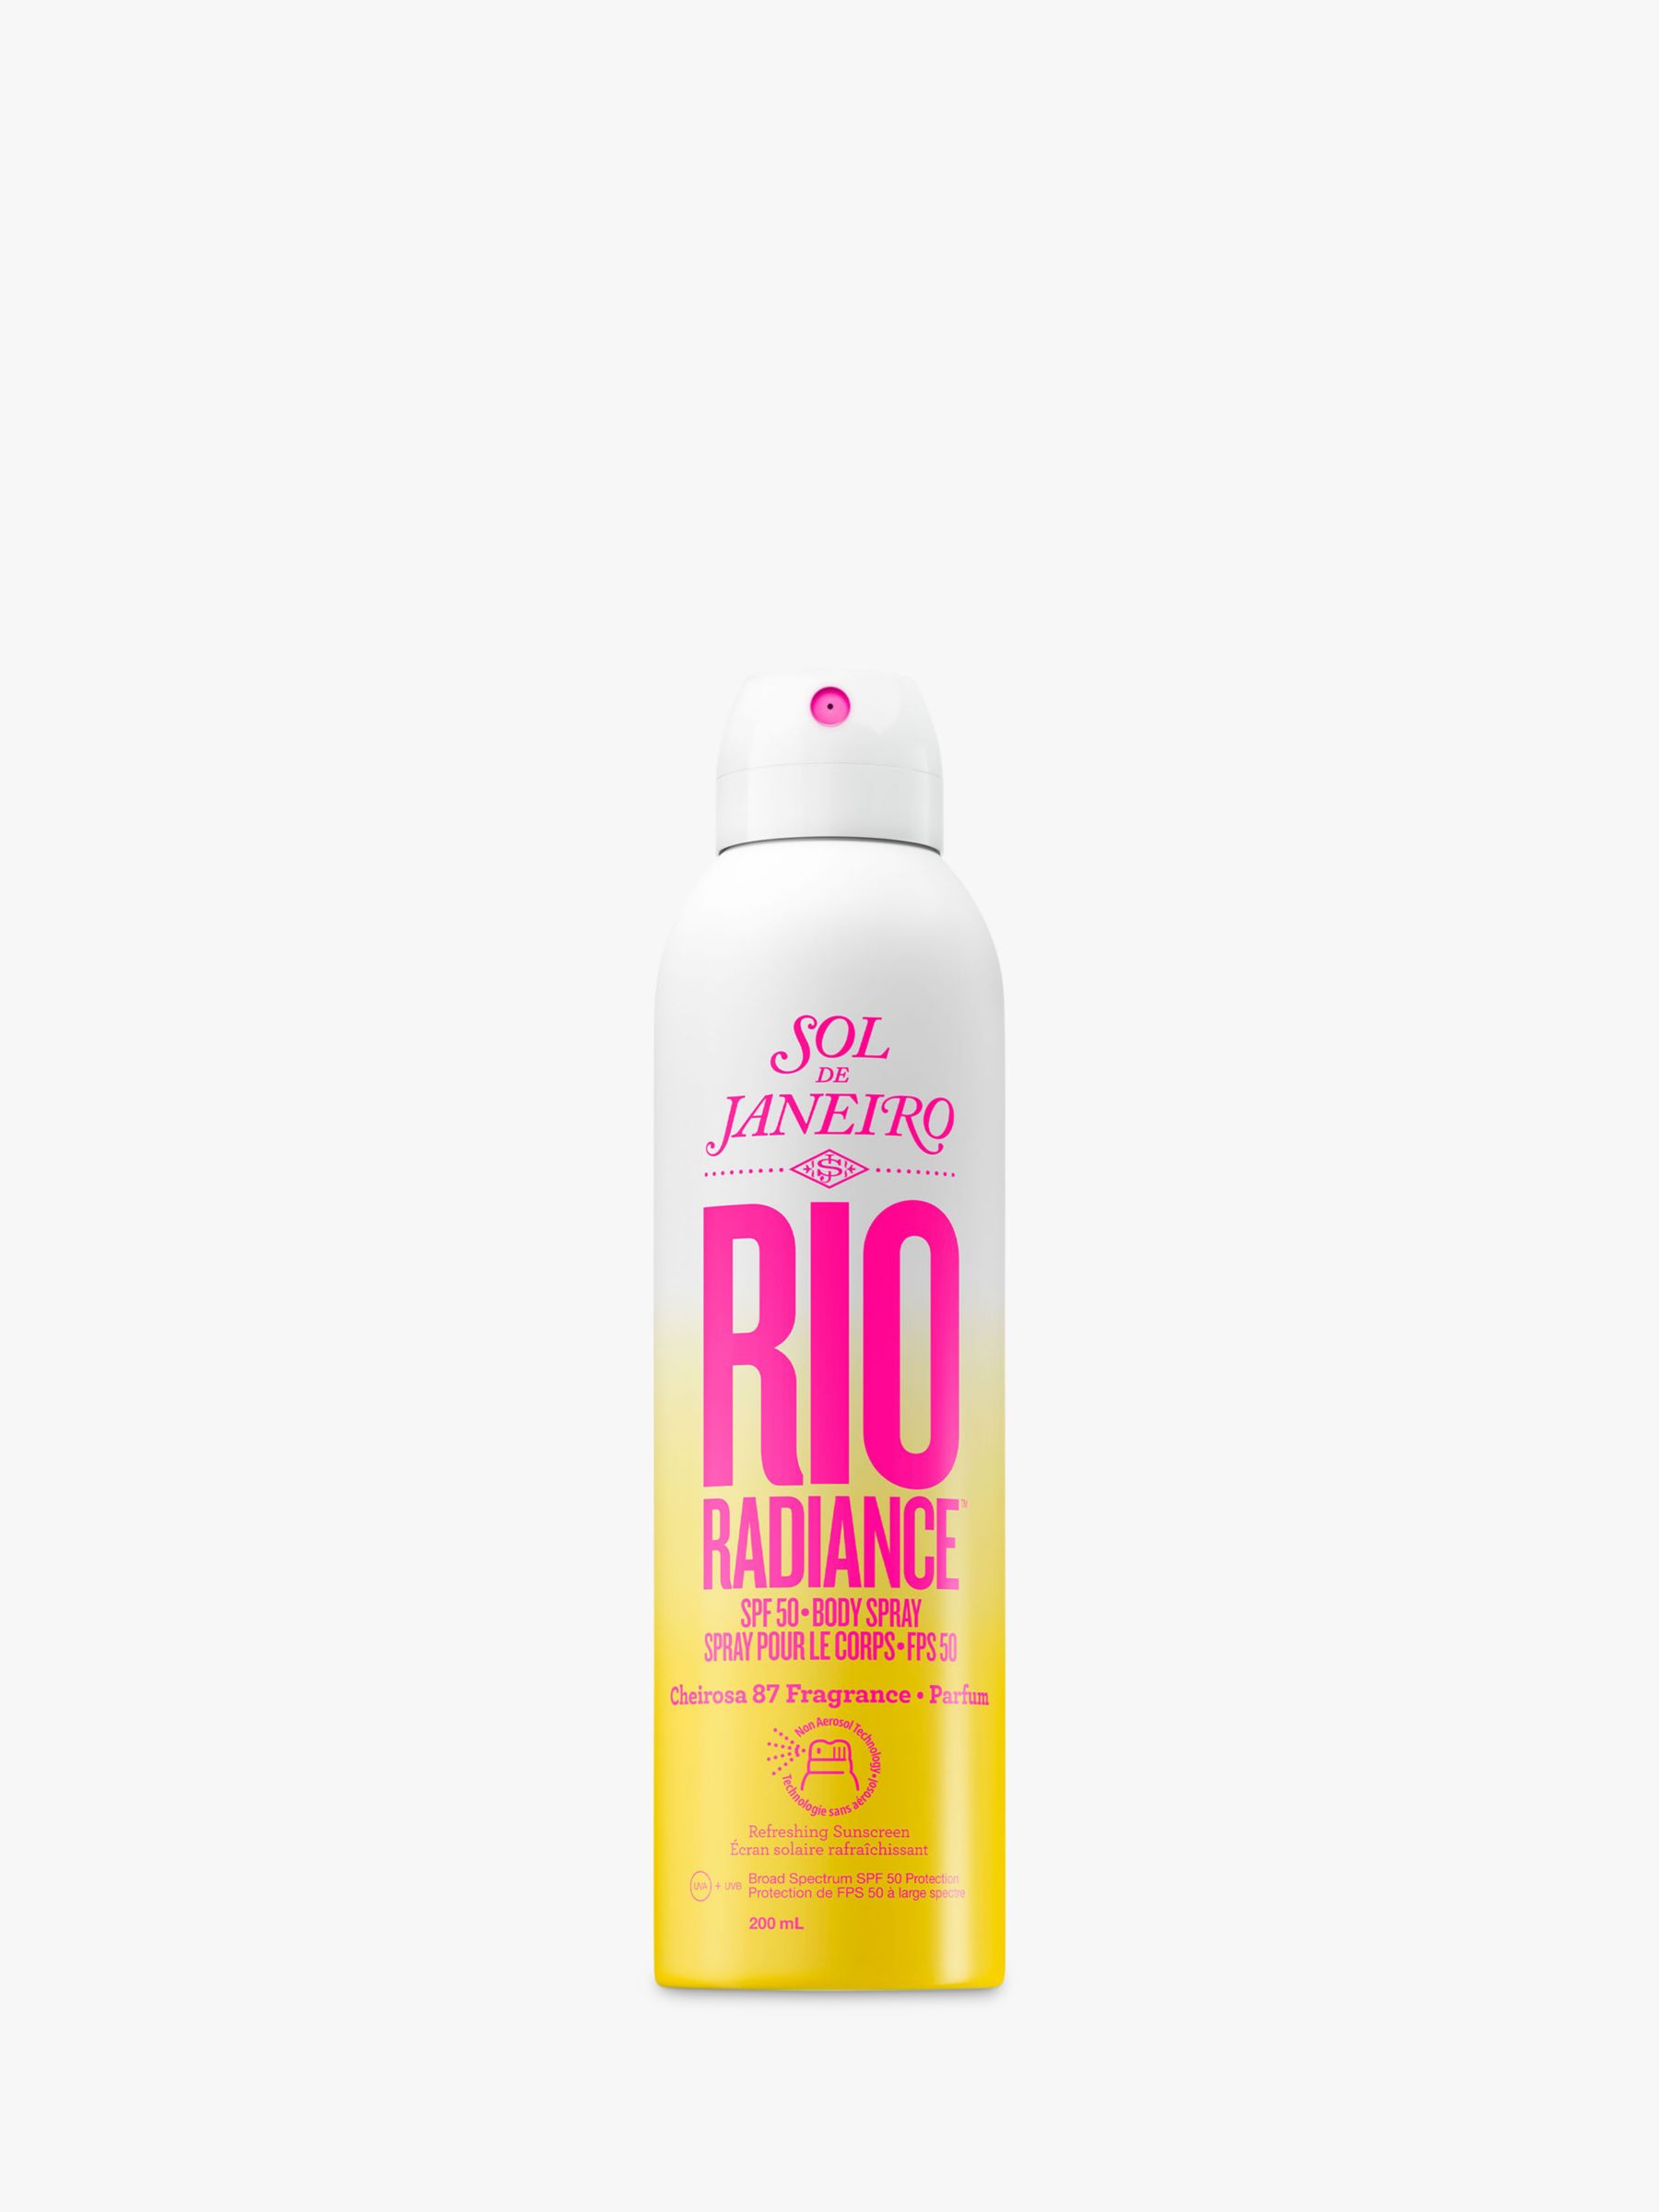 Sol de Janeiro Rio Radiance Body Spray SPF 50, 200ml